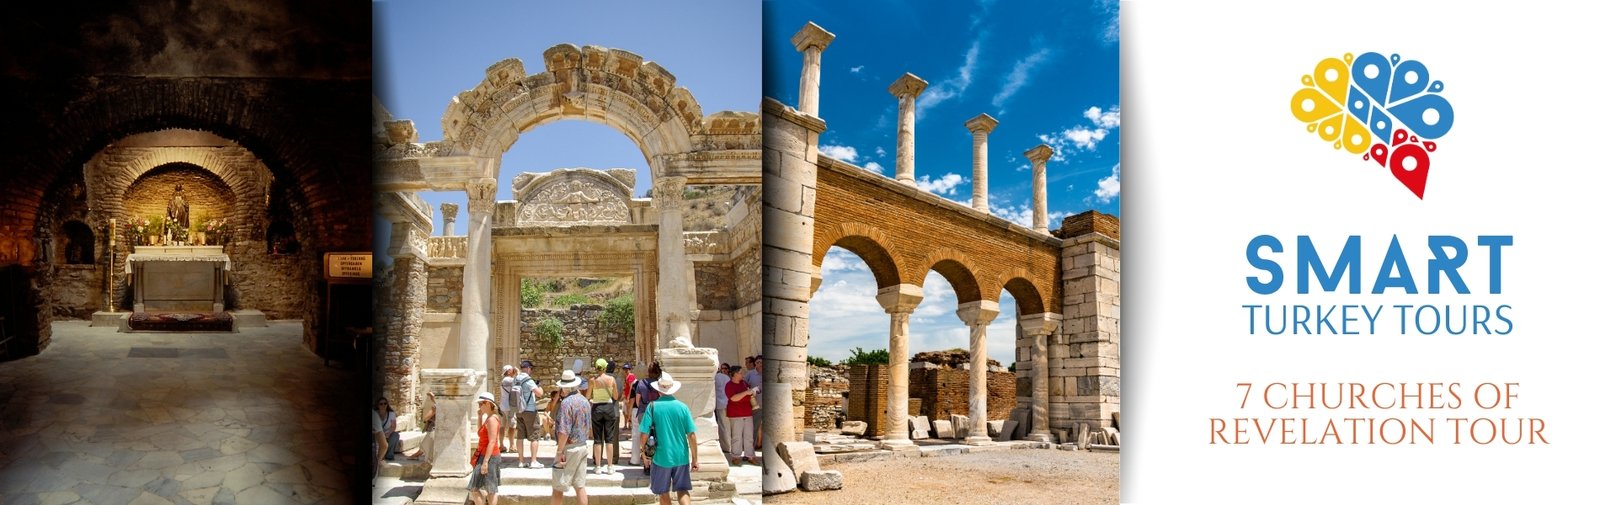 EPHESUS TOUR & DEPART FROM TURKEY